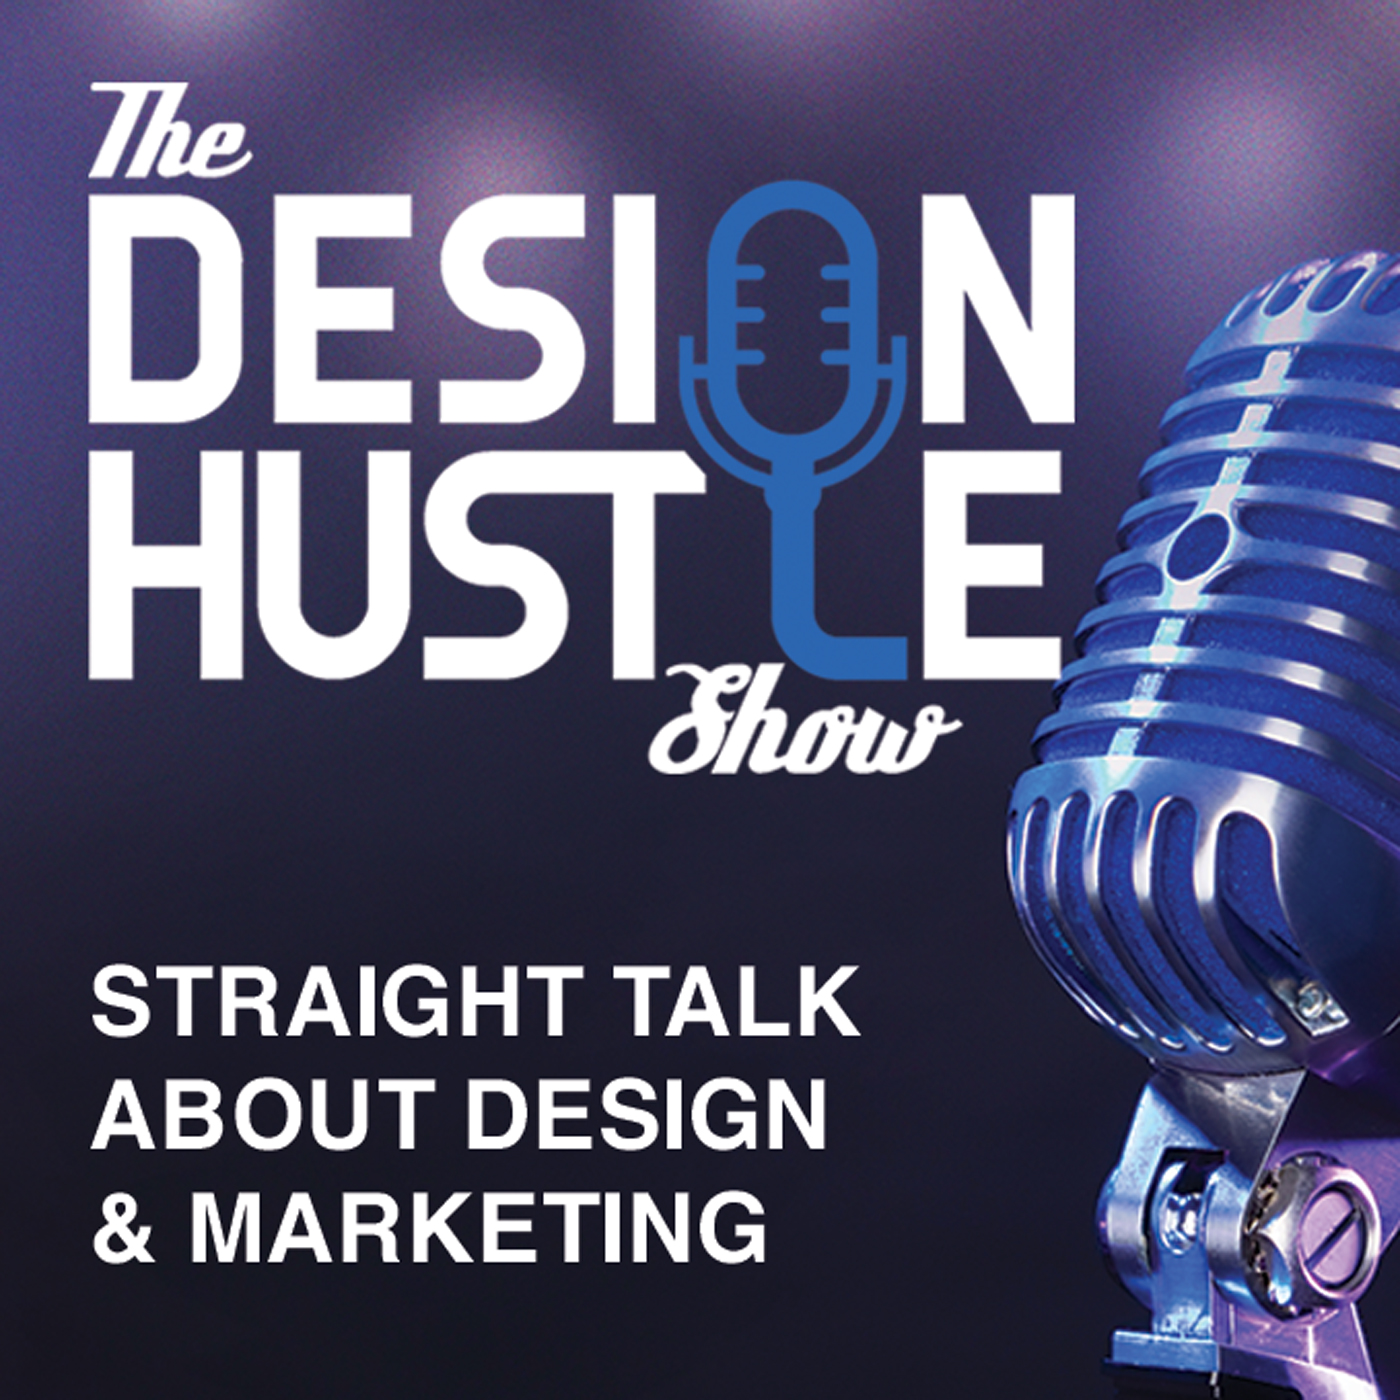 The Design Hustle Show